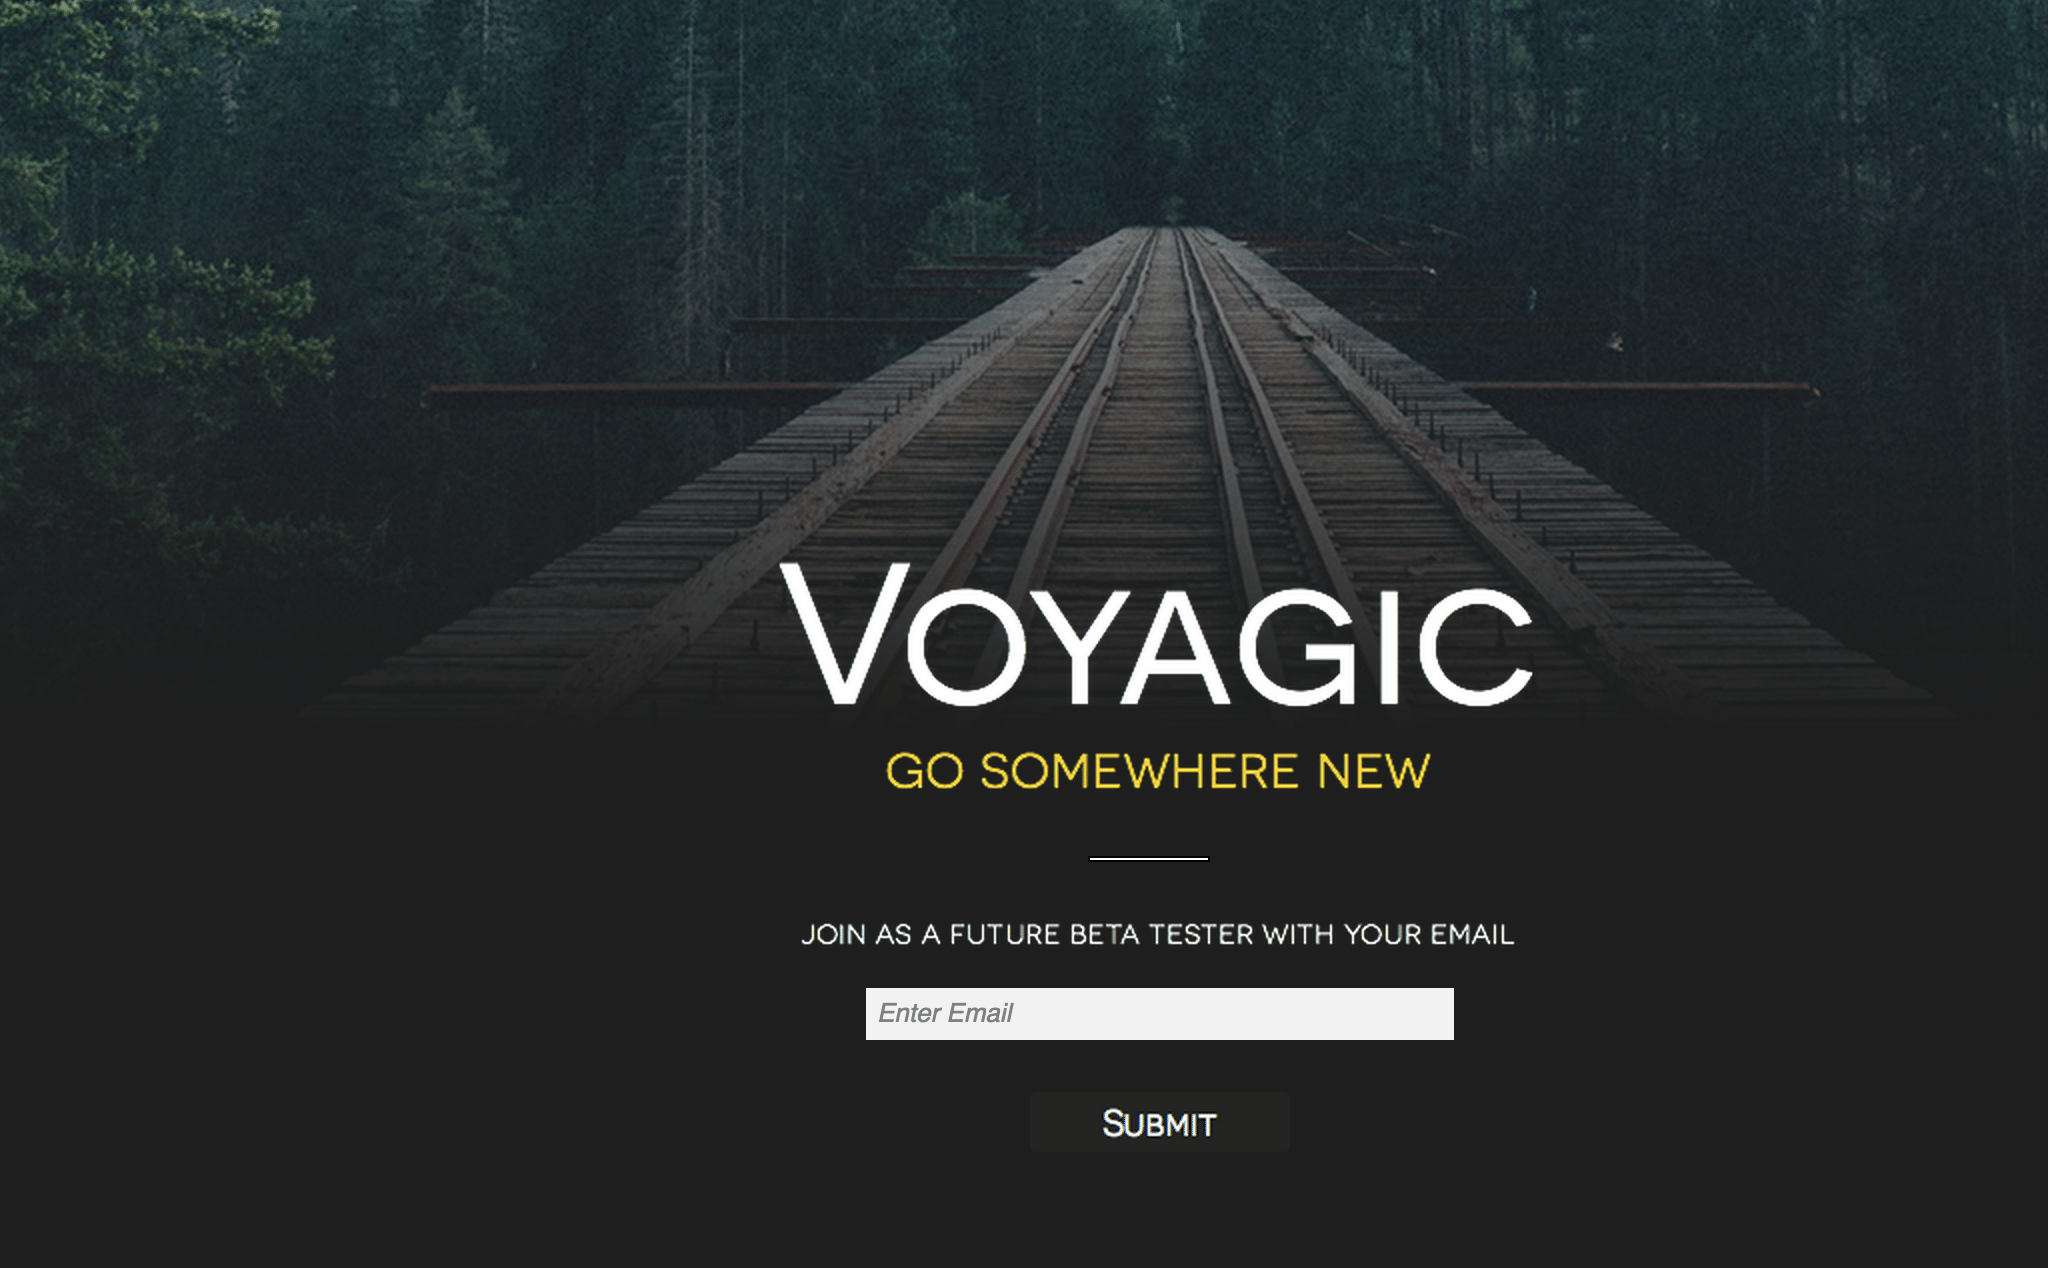 Voyagic is a trip-planning mobile app.